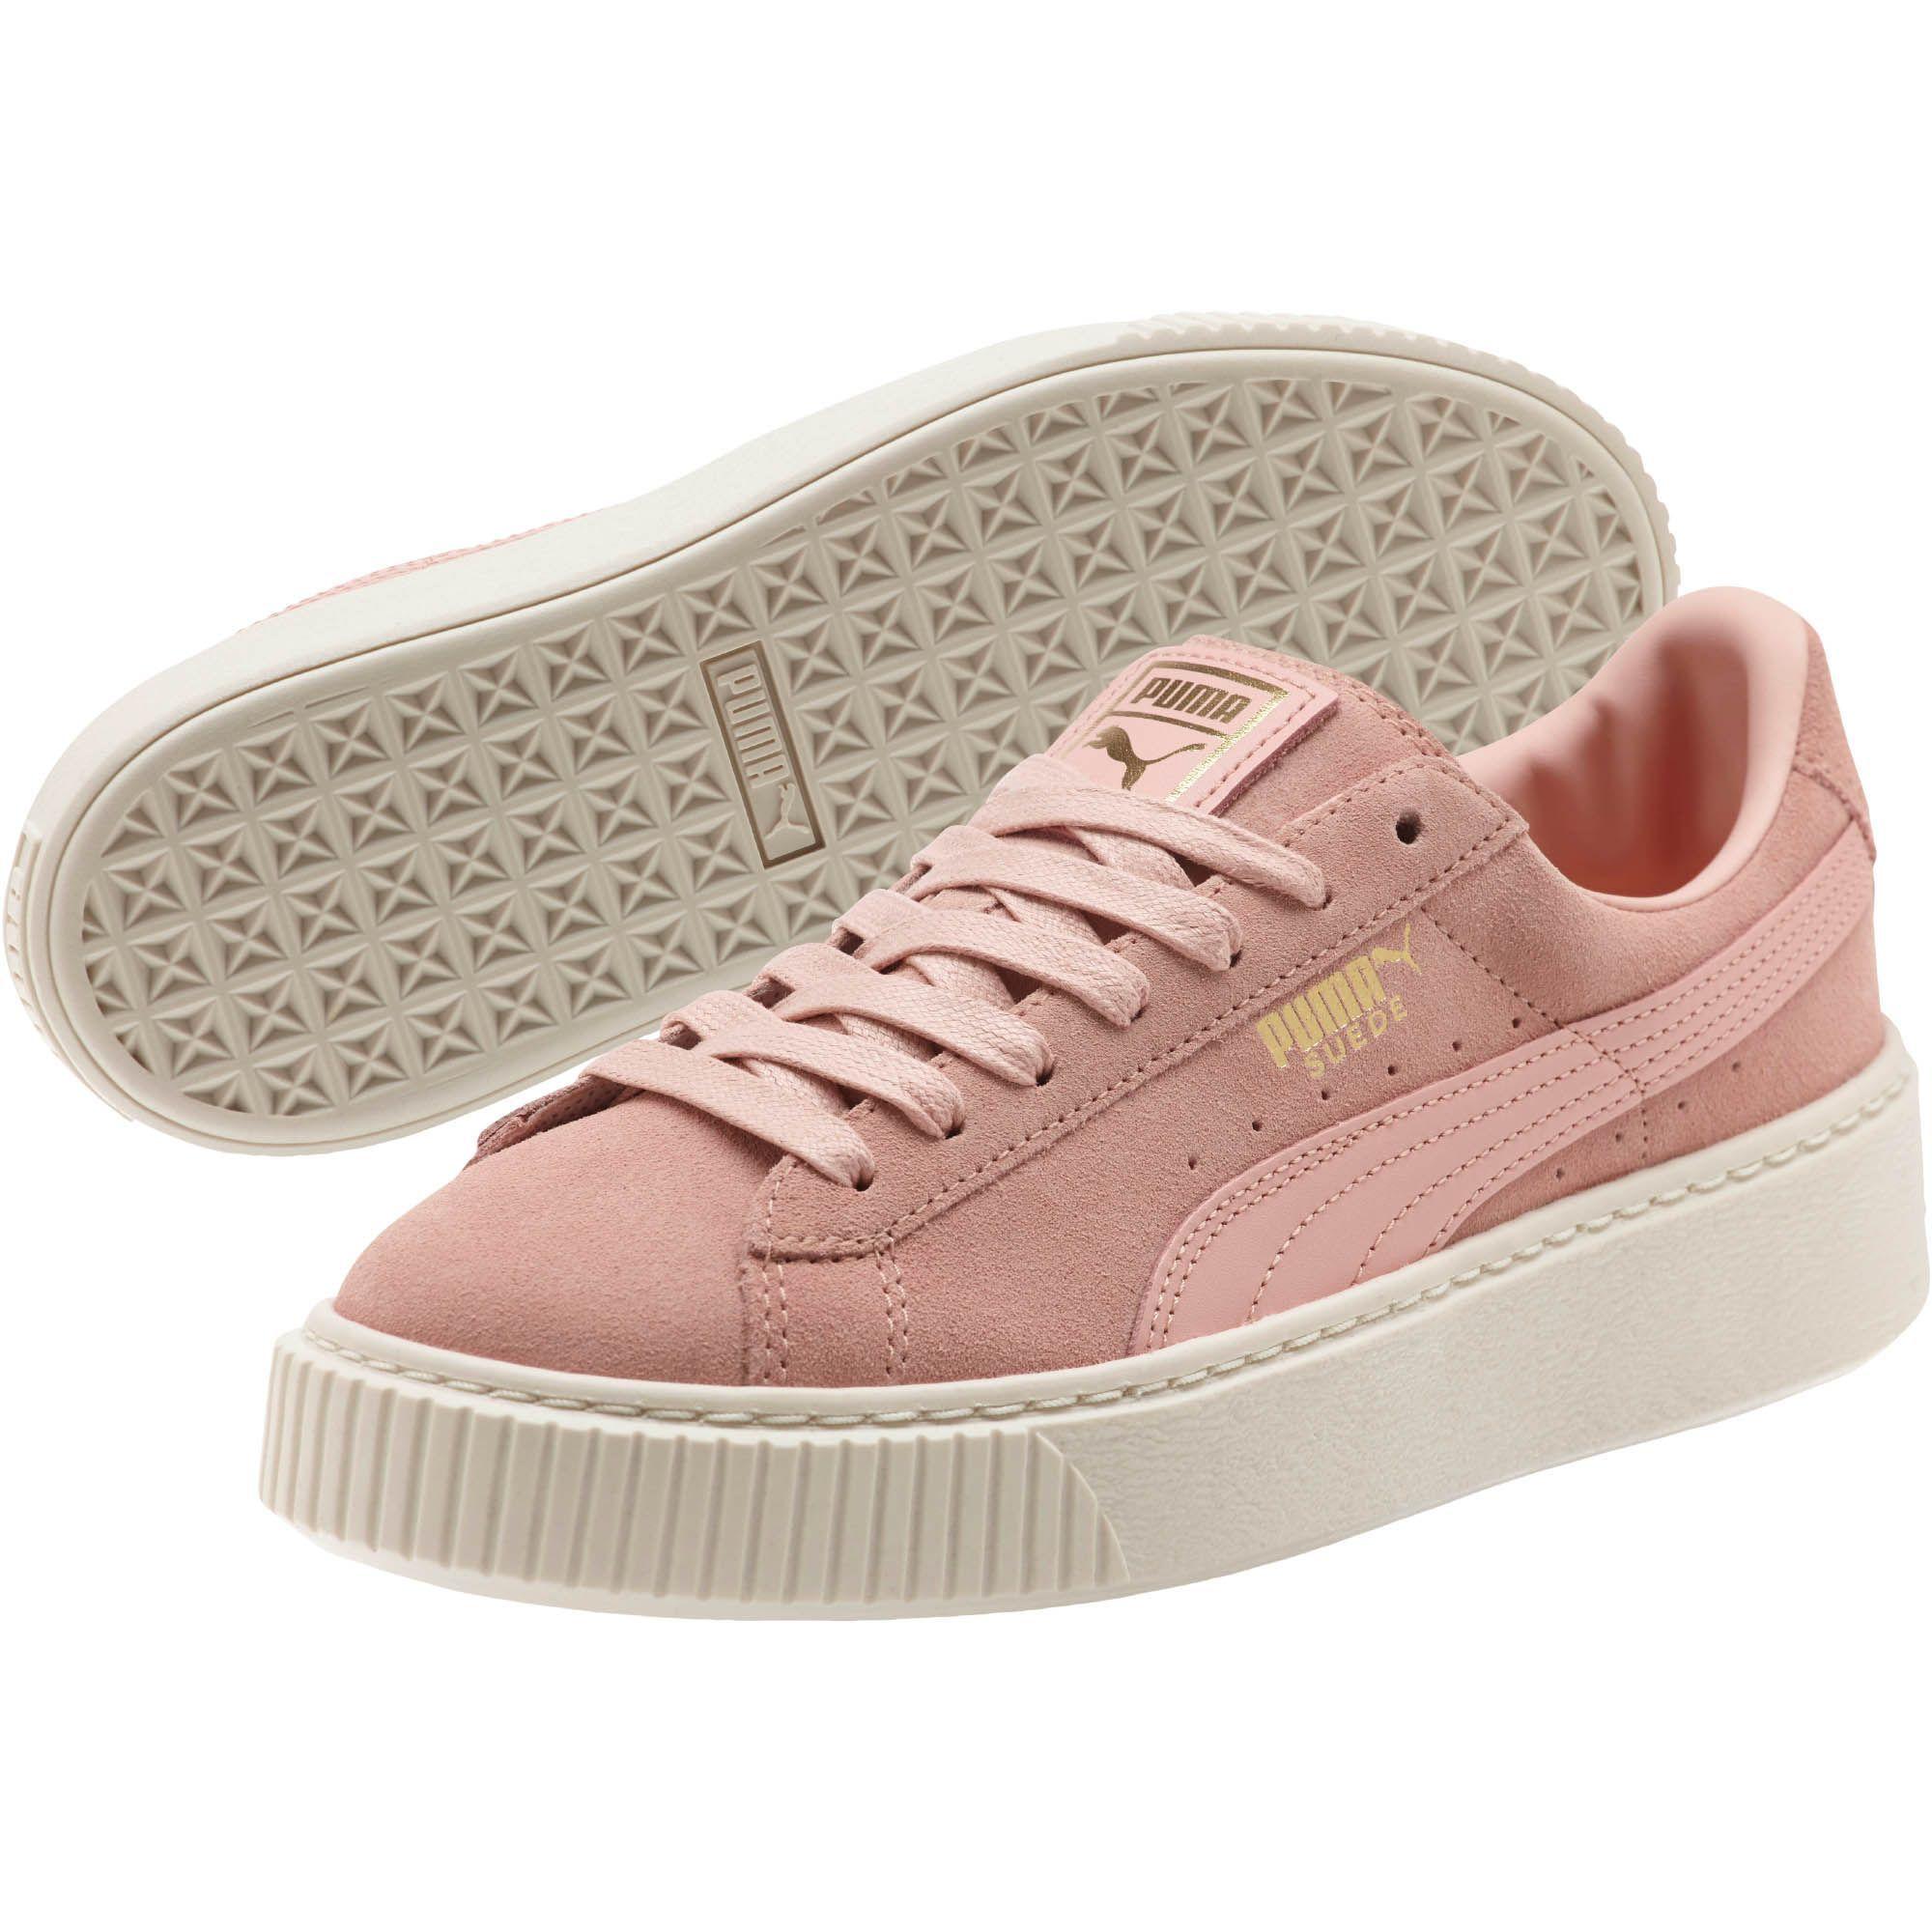 Lyst - Puma Suede Platform Core Women's Sneakers in Pink